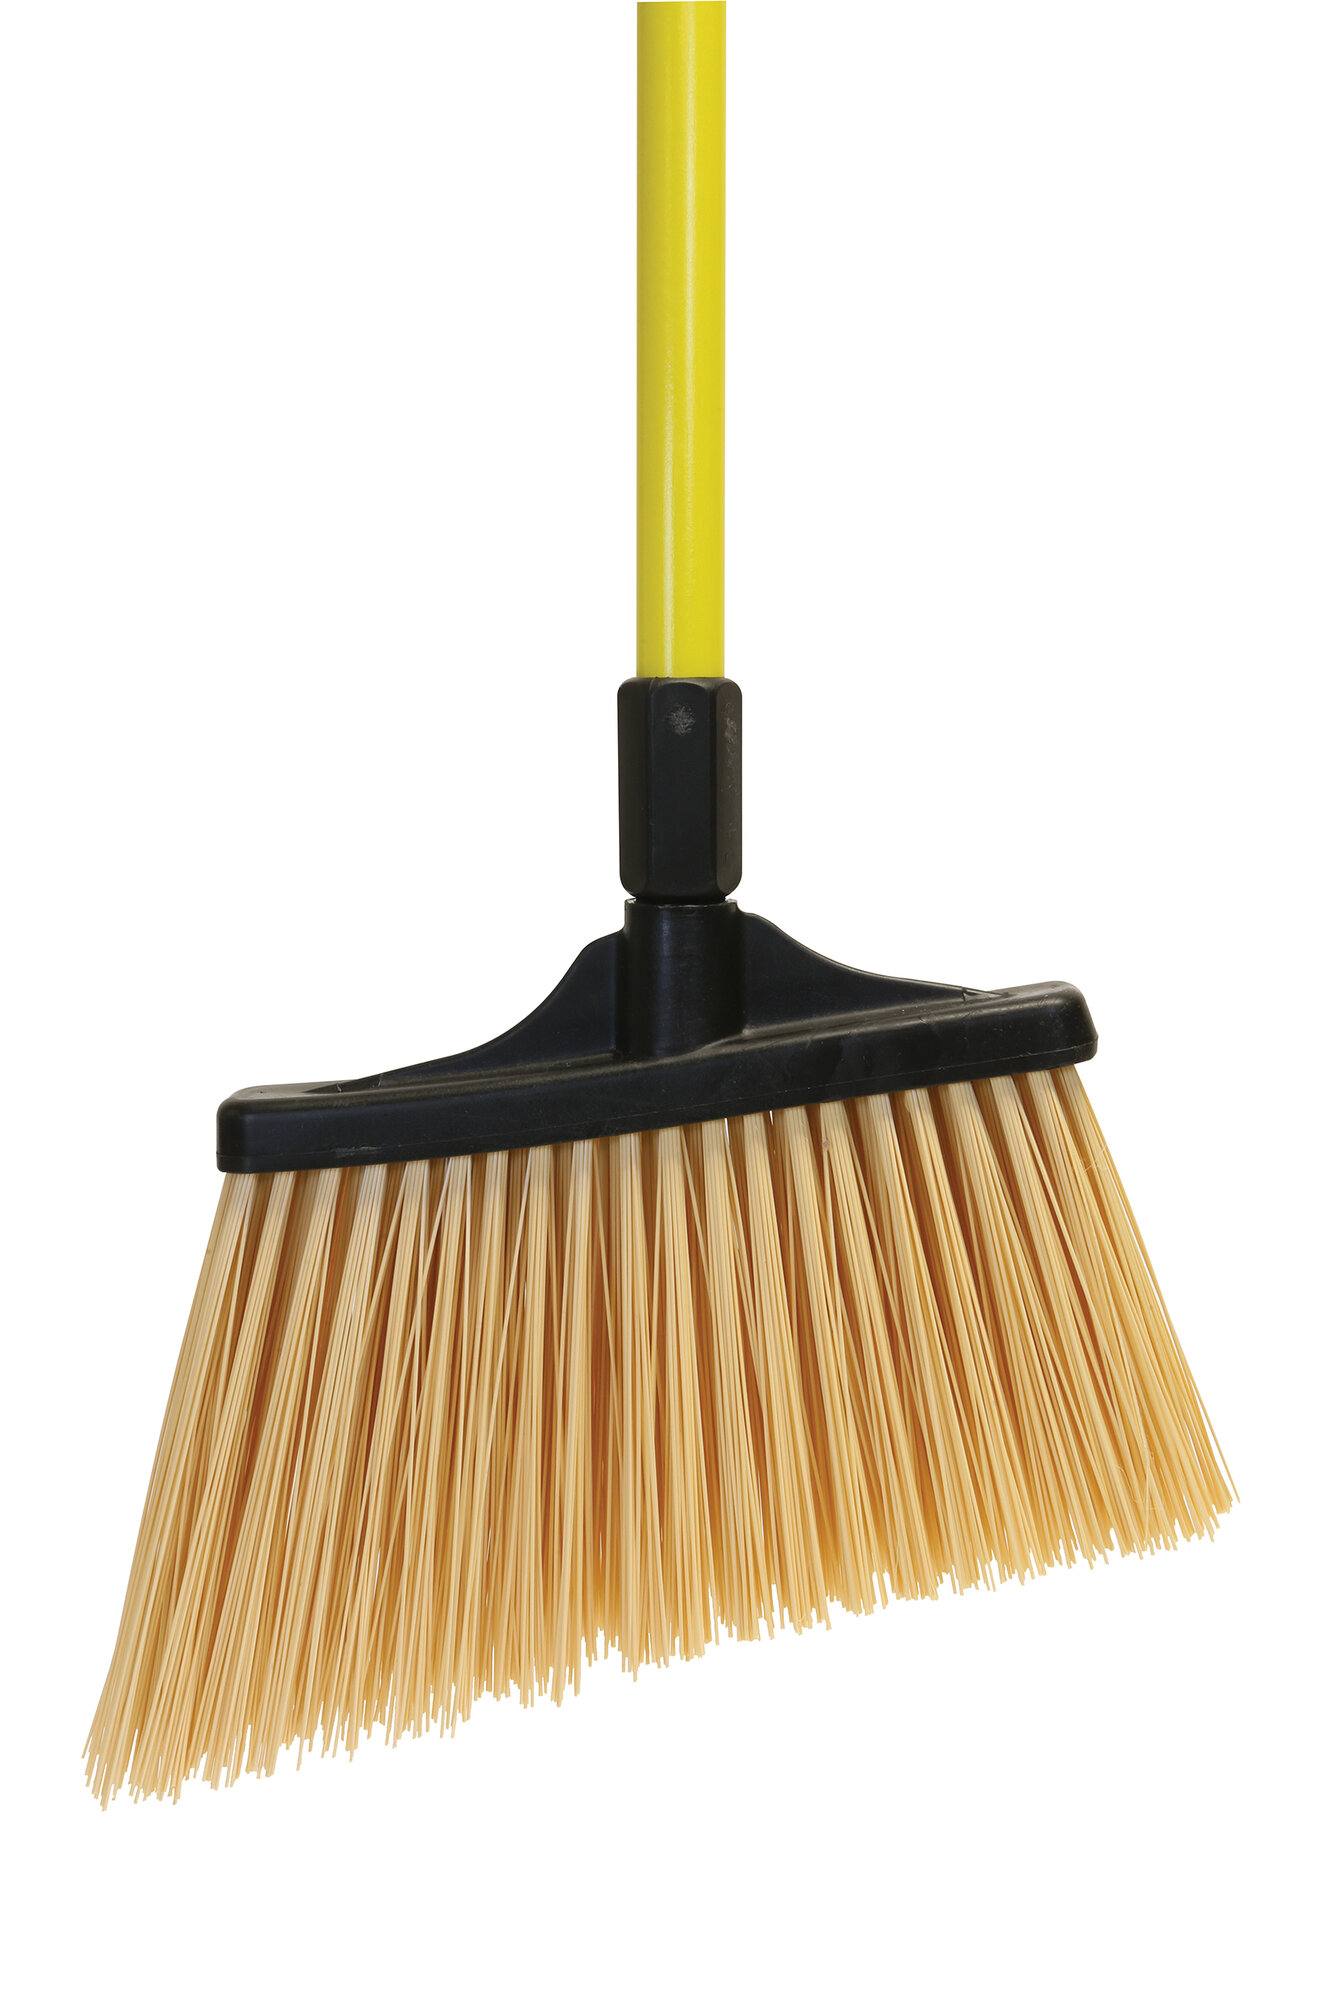 o cedar broom and dustpan set